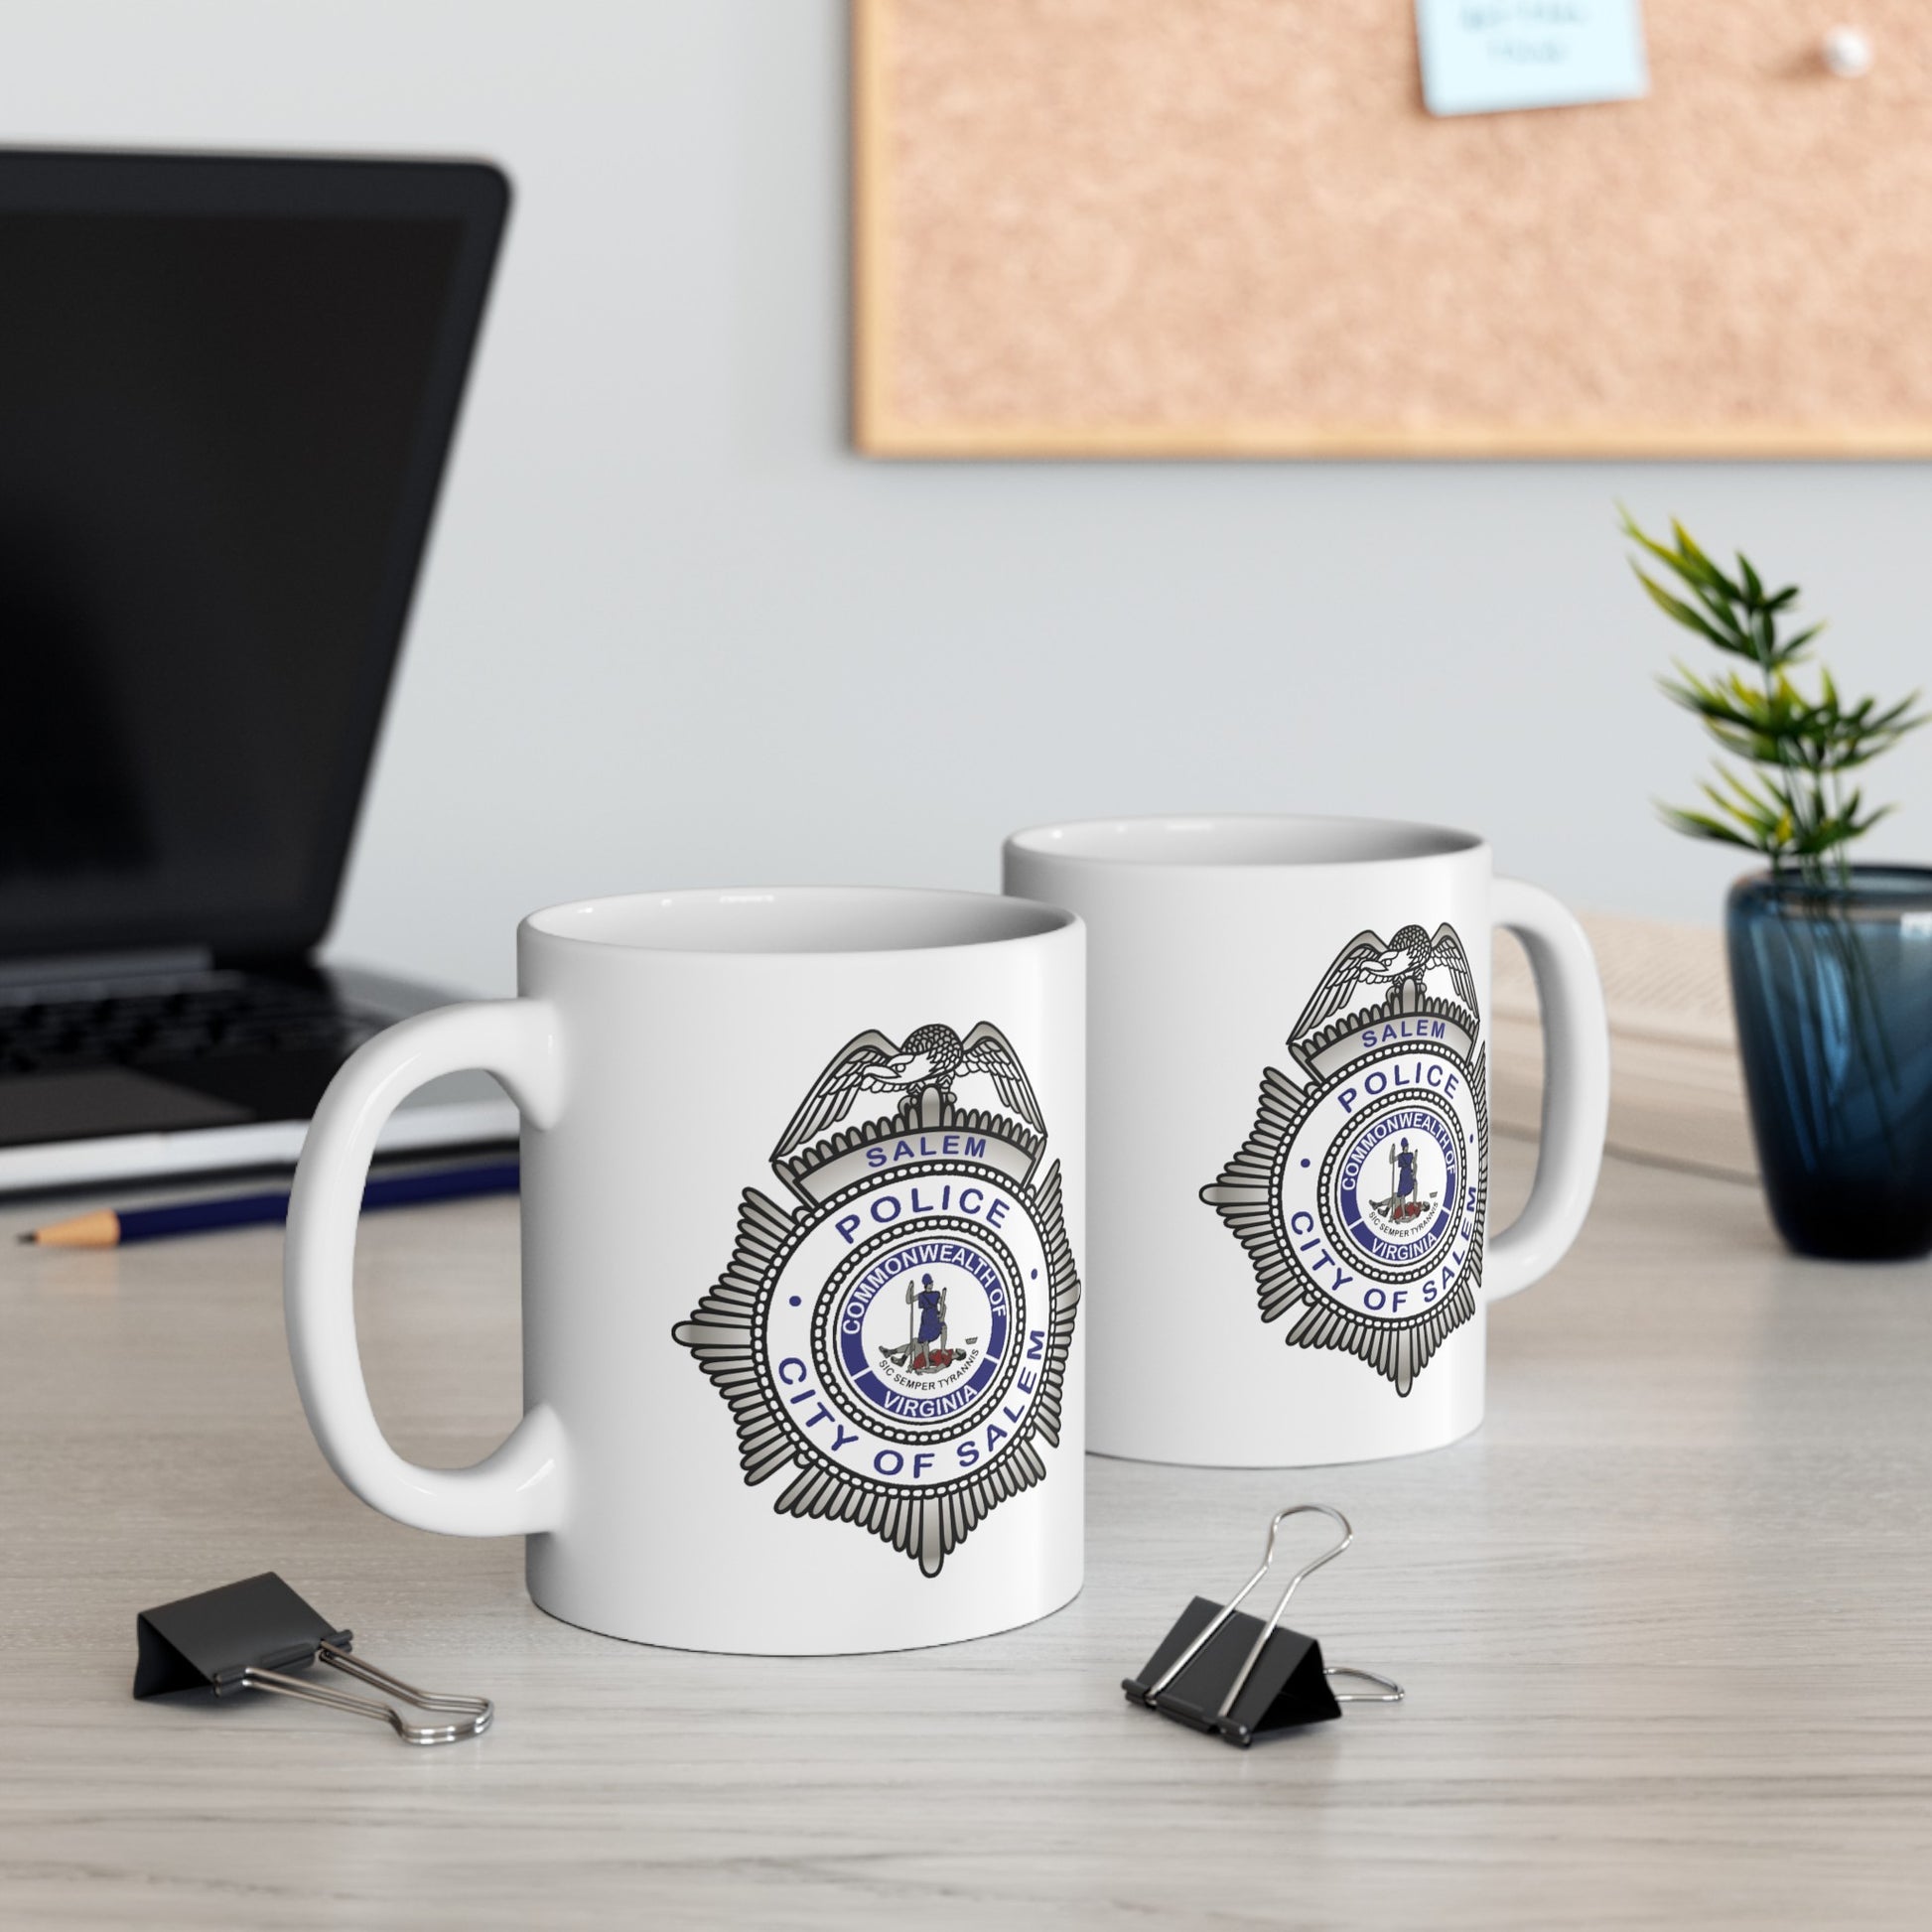 Salem Police Coffee Mug - Double Sided White Ceramic 11oz by TheGlassyLass.com